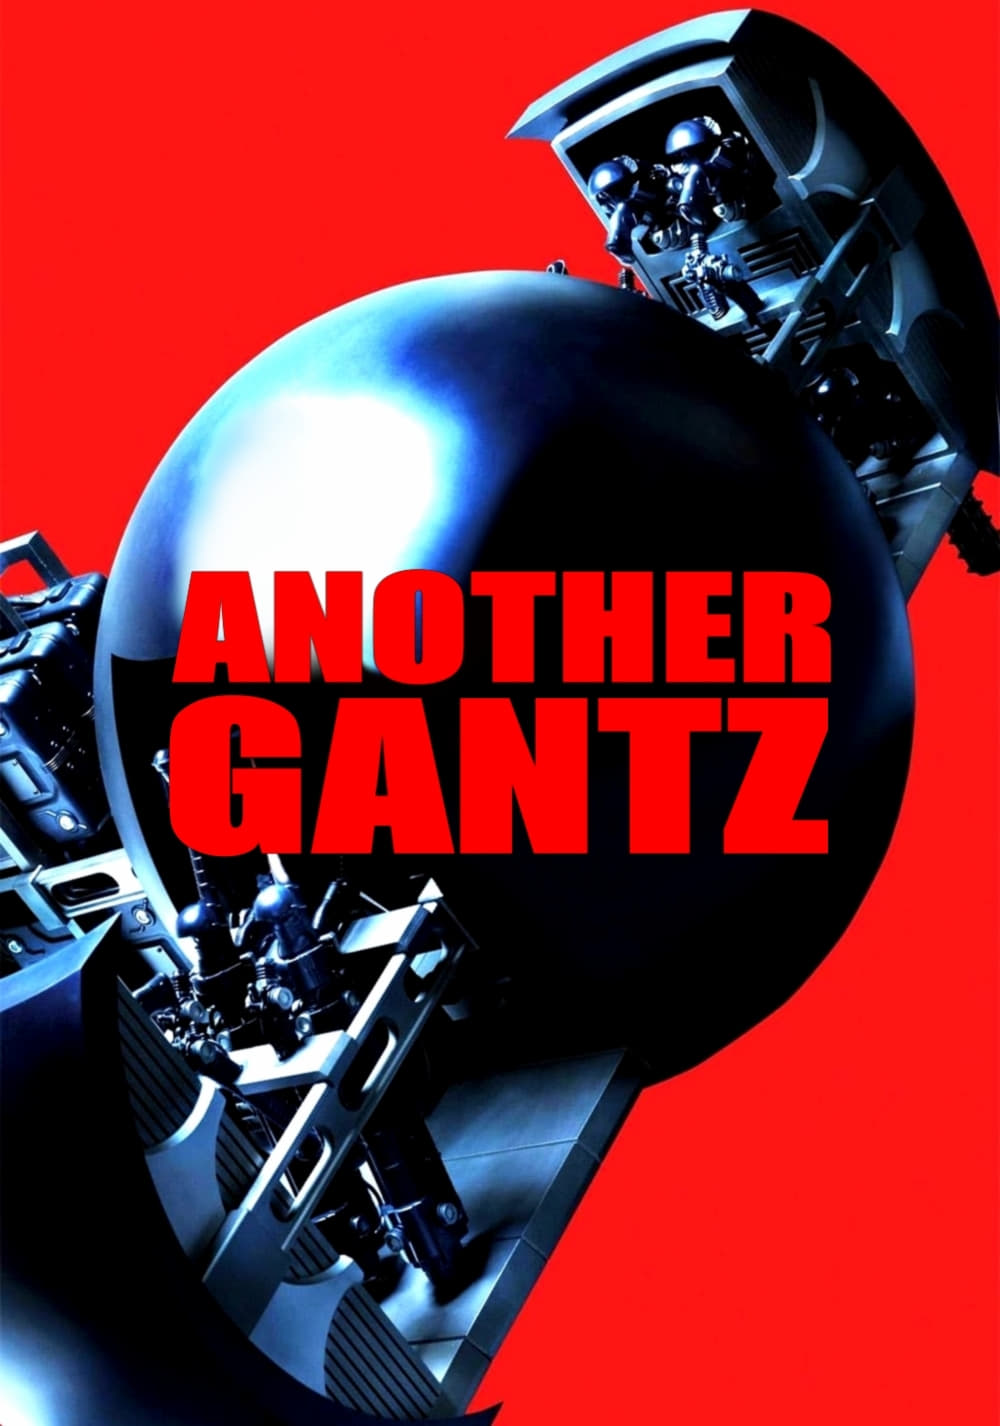 Another Gantz film